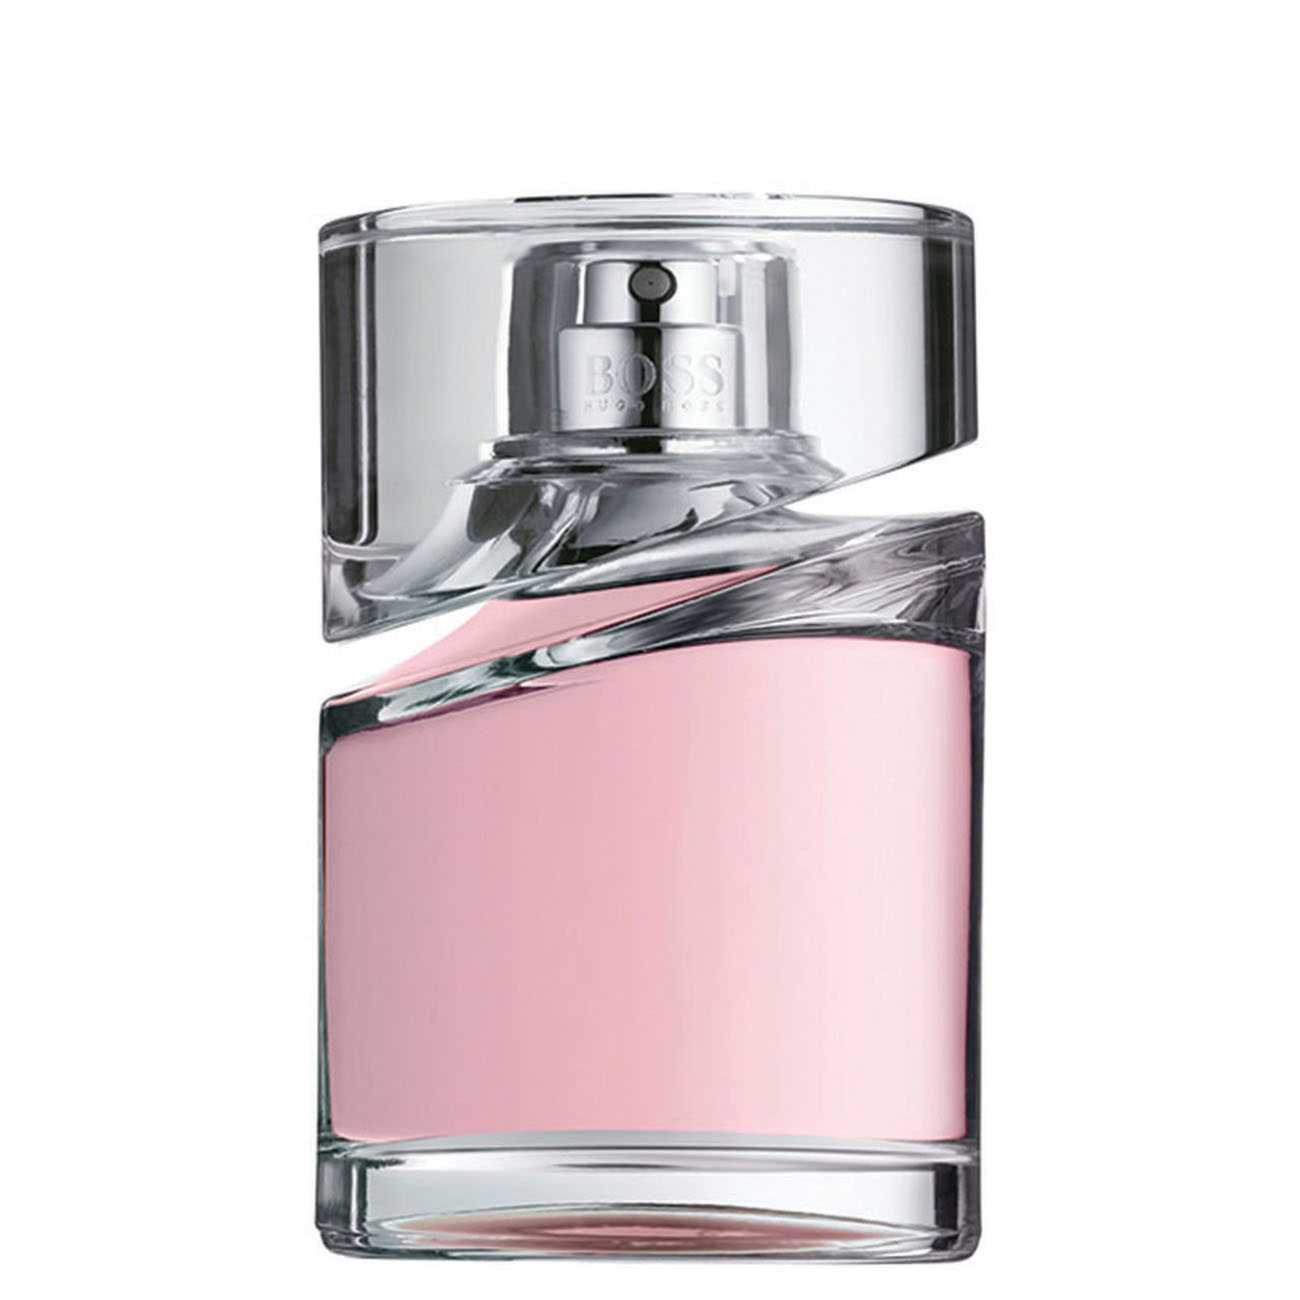 Apa de Parfum Hugo Boss FEMME 50ml cu comanda online